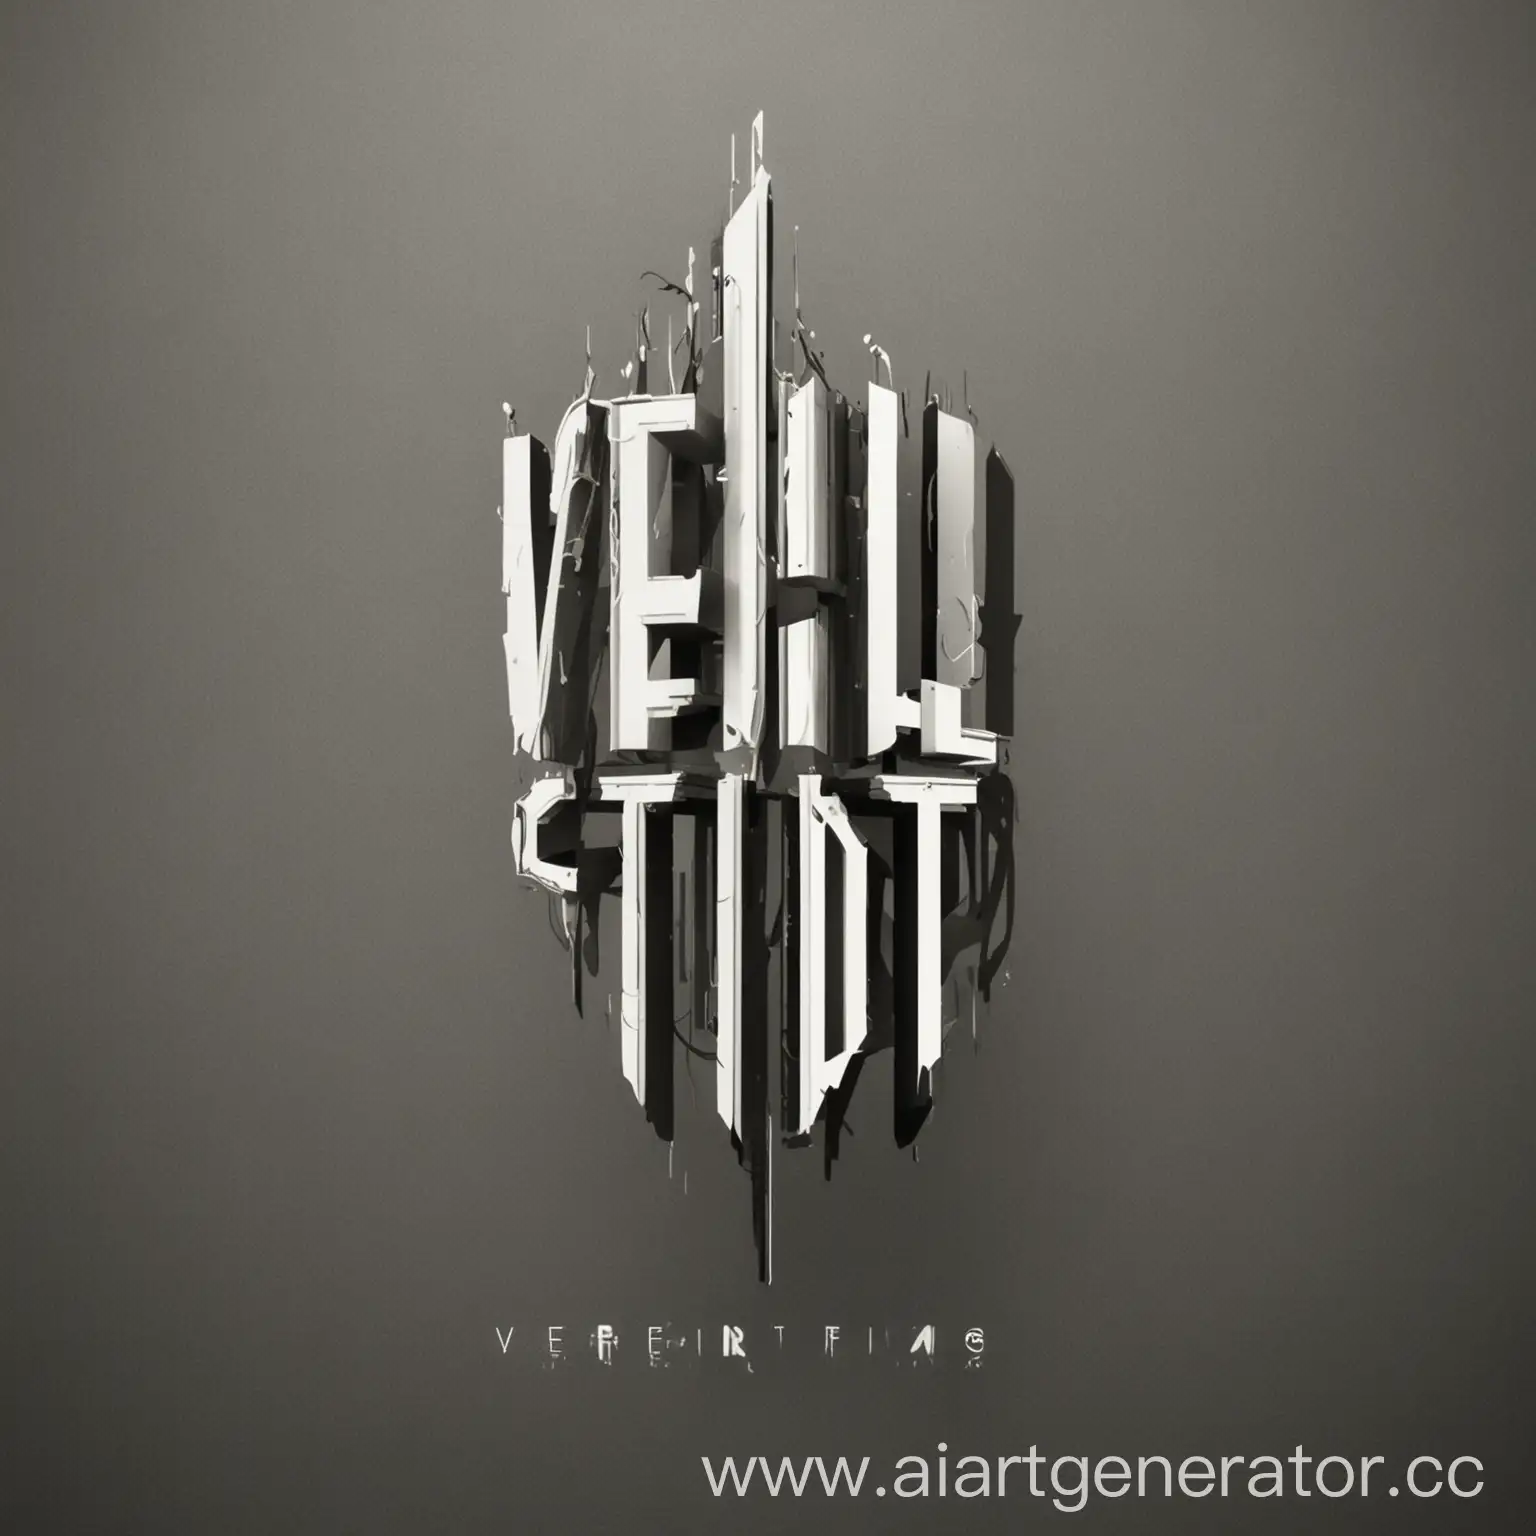 Vertical-Film-Studio-Logo-Design-Short-Film-Emblem-with-Striking-Visuals